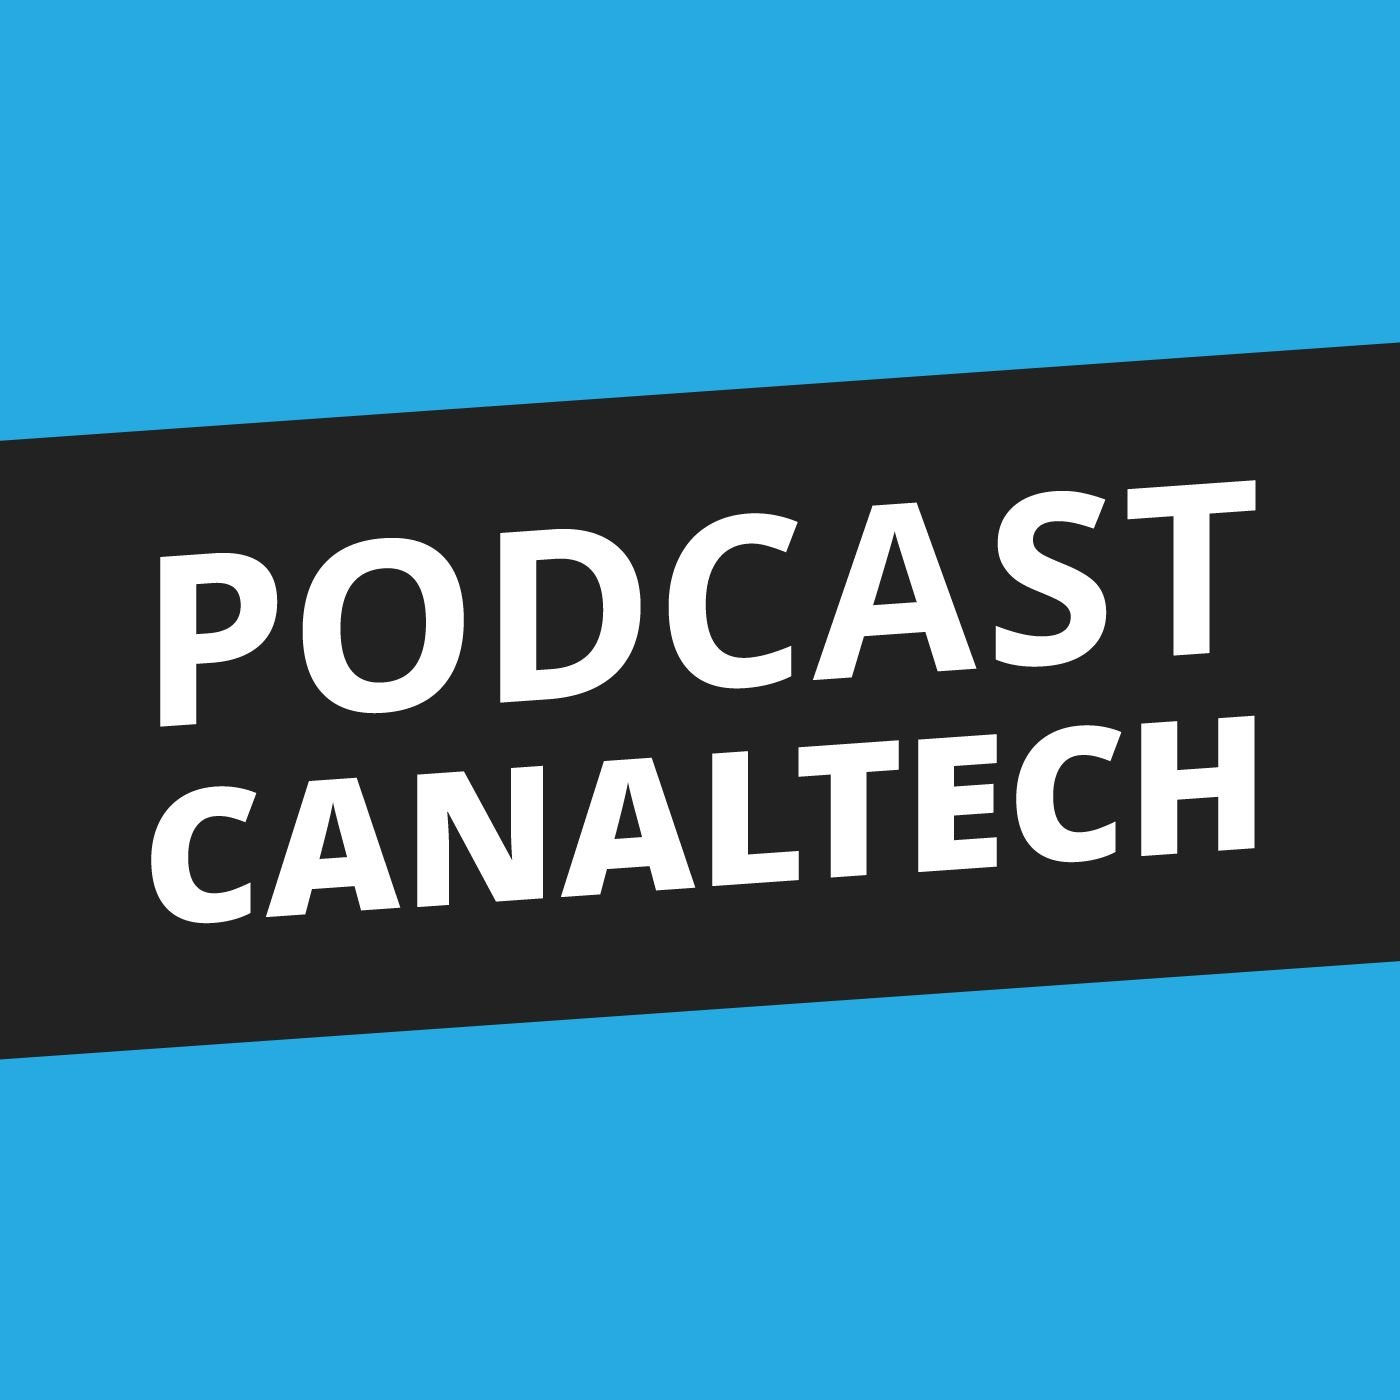 Podcast Canaltech - 25/06/14